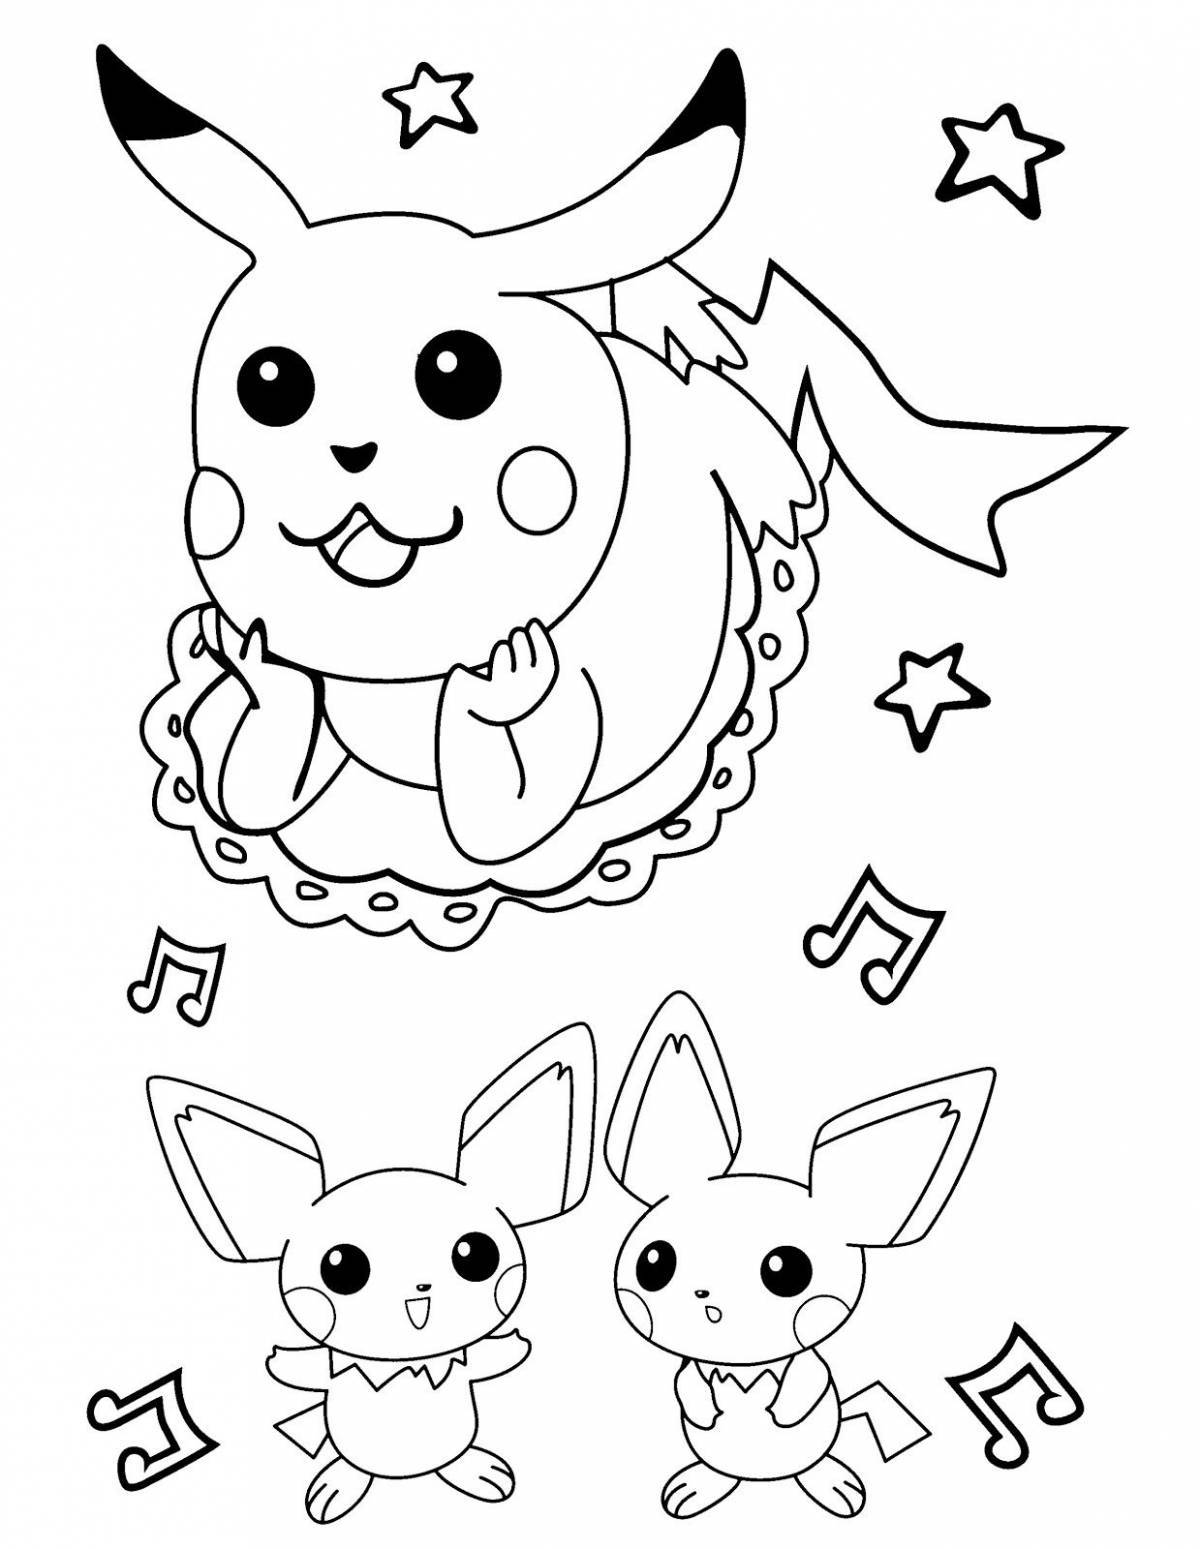 Cute new year pikachu